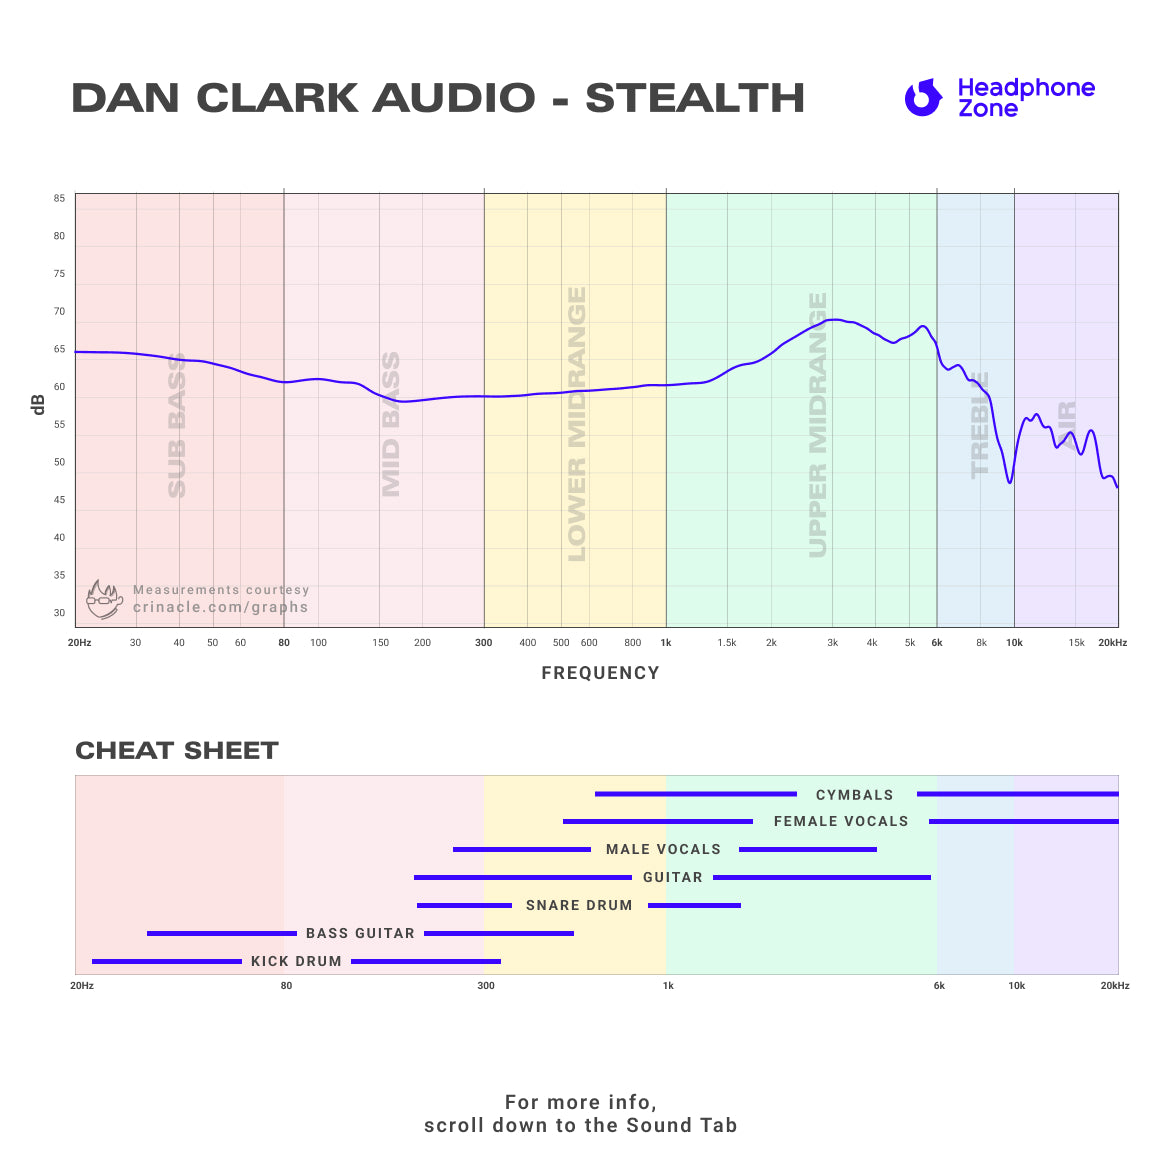 Dan Clark Audio - STEALTH